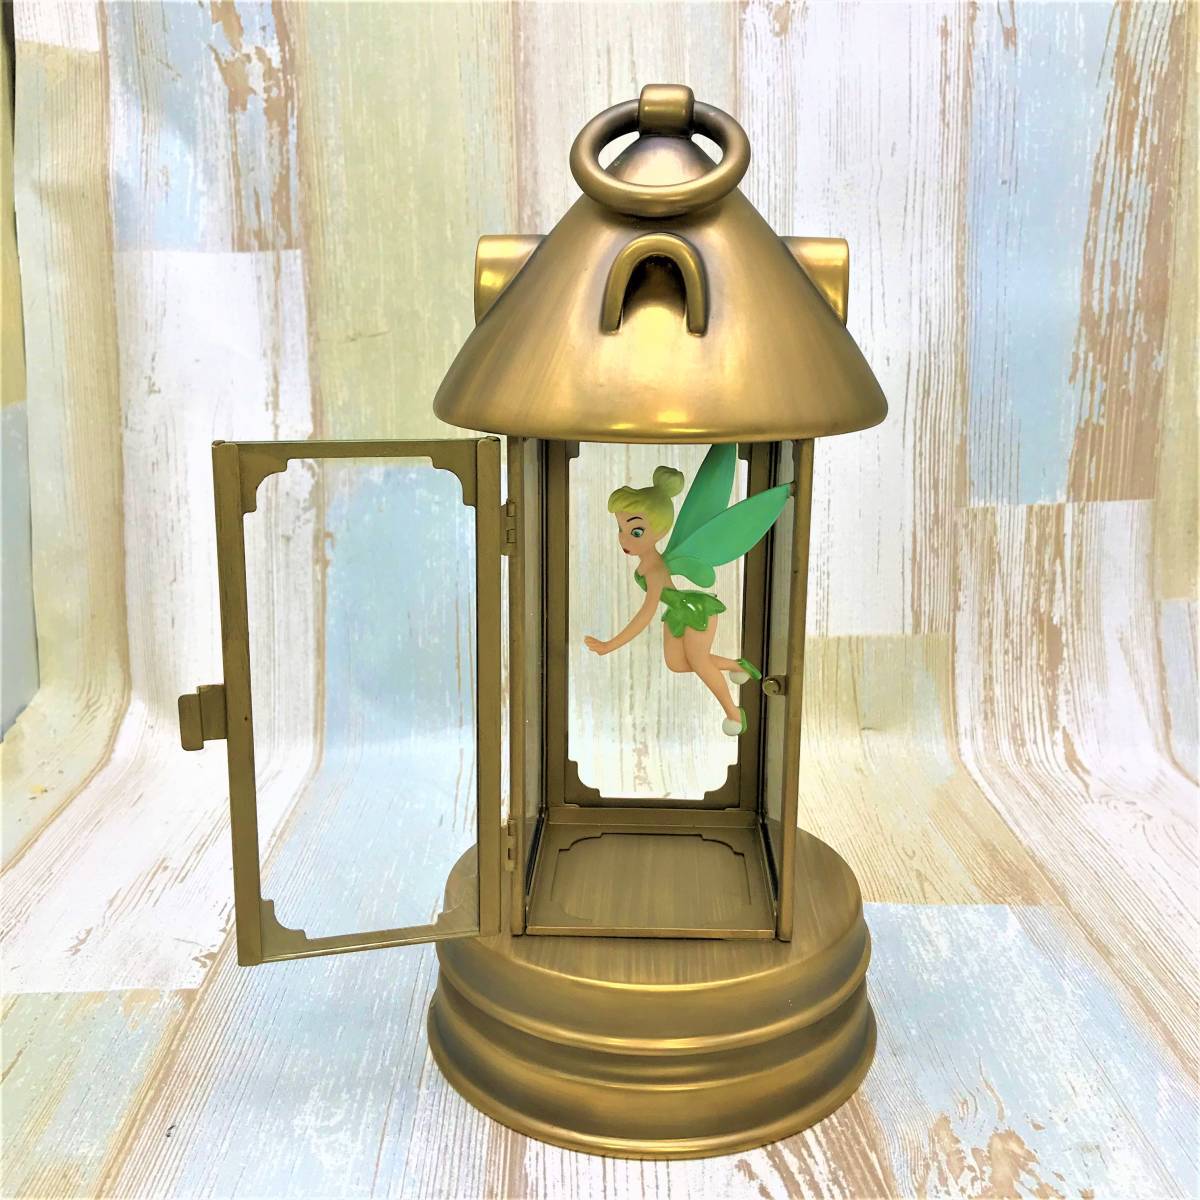  ultra rare *WDCC Peter Pan Peter Pan Tinkerbell Tinker Bell lantern type glass ceramics made figure * Disney Disney TDL box attaching 